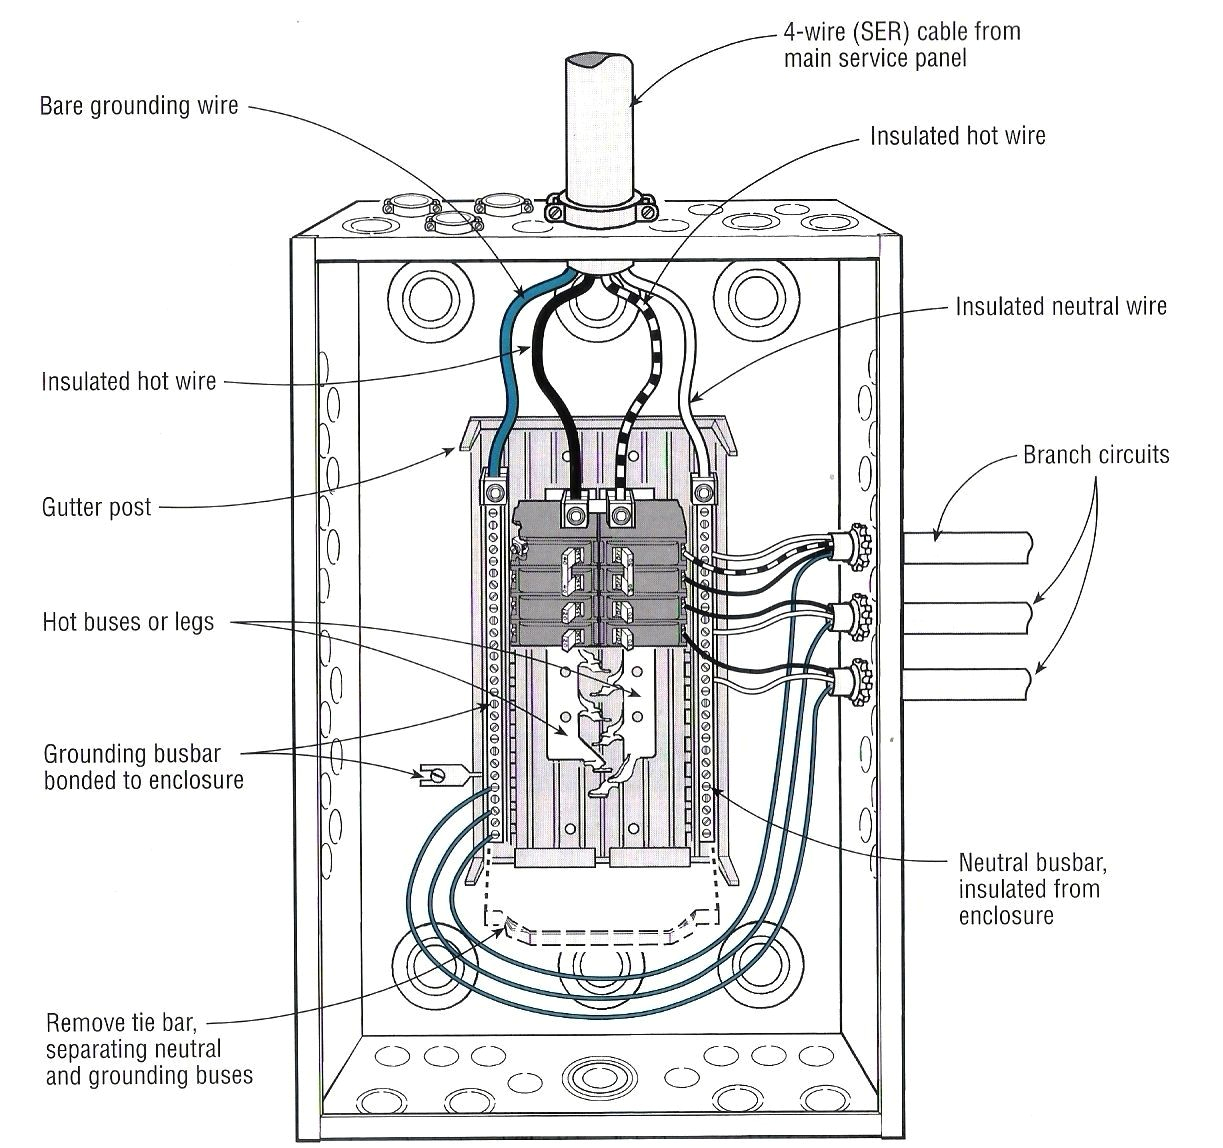 hydro installation guide a distribution sub panel